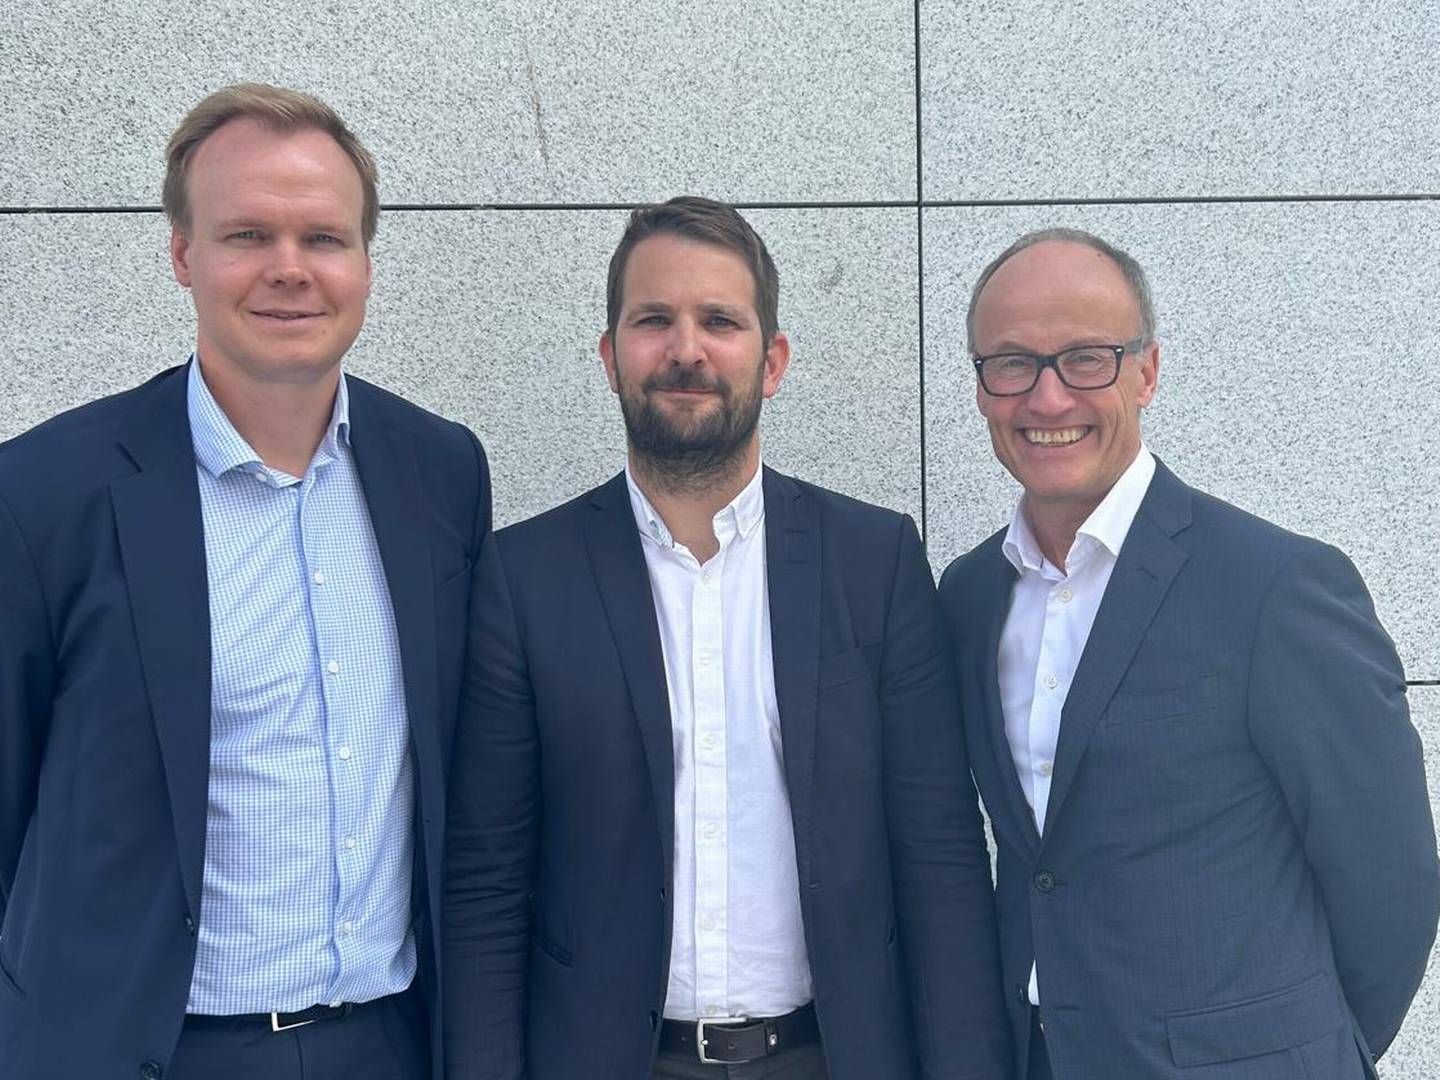 From left: André Risholm CEO at Amon Maritime, Steinar Kostøl CTO at Amon Maritime and Nils Kristian Nakstad Managing Director at Enova.